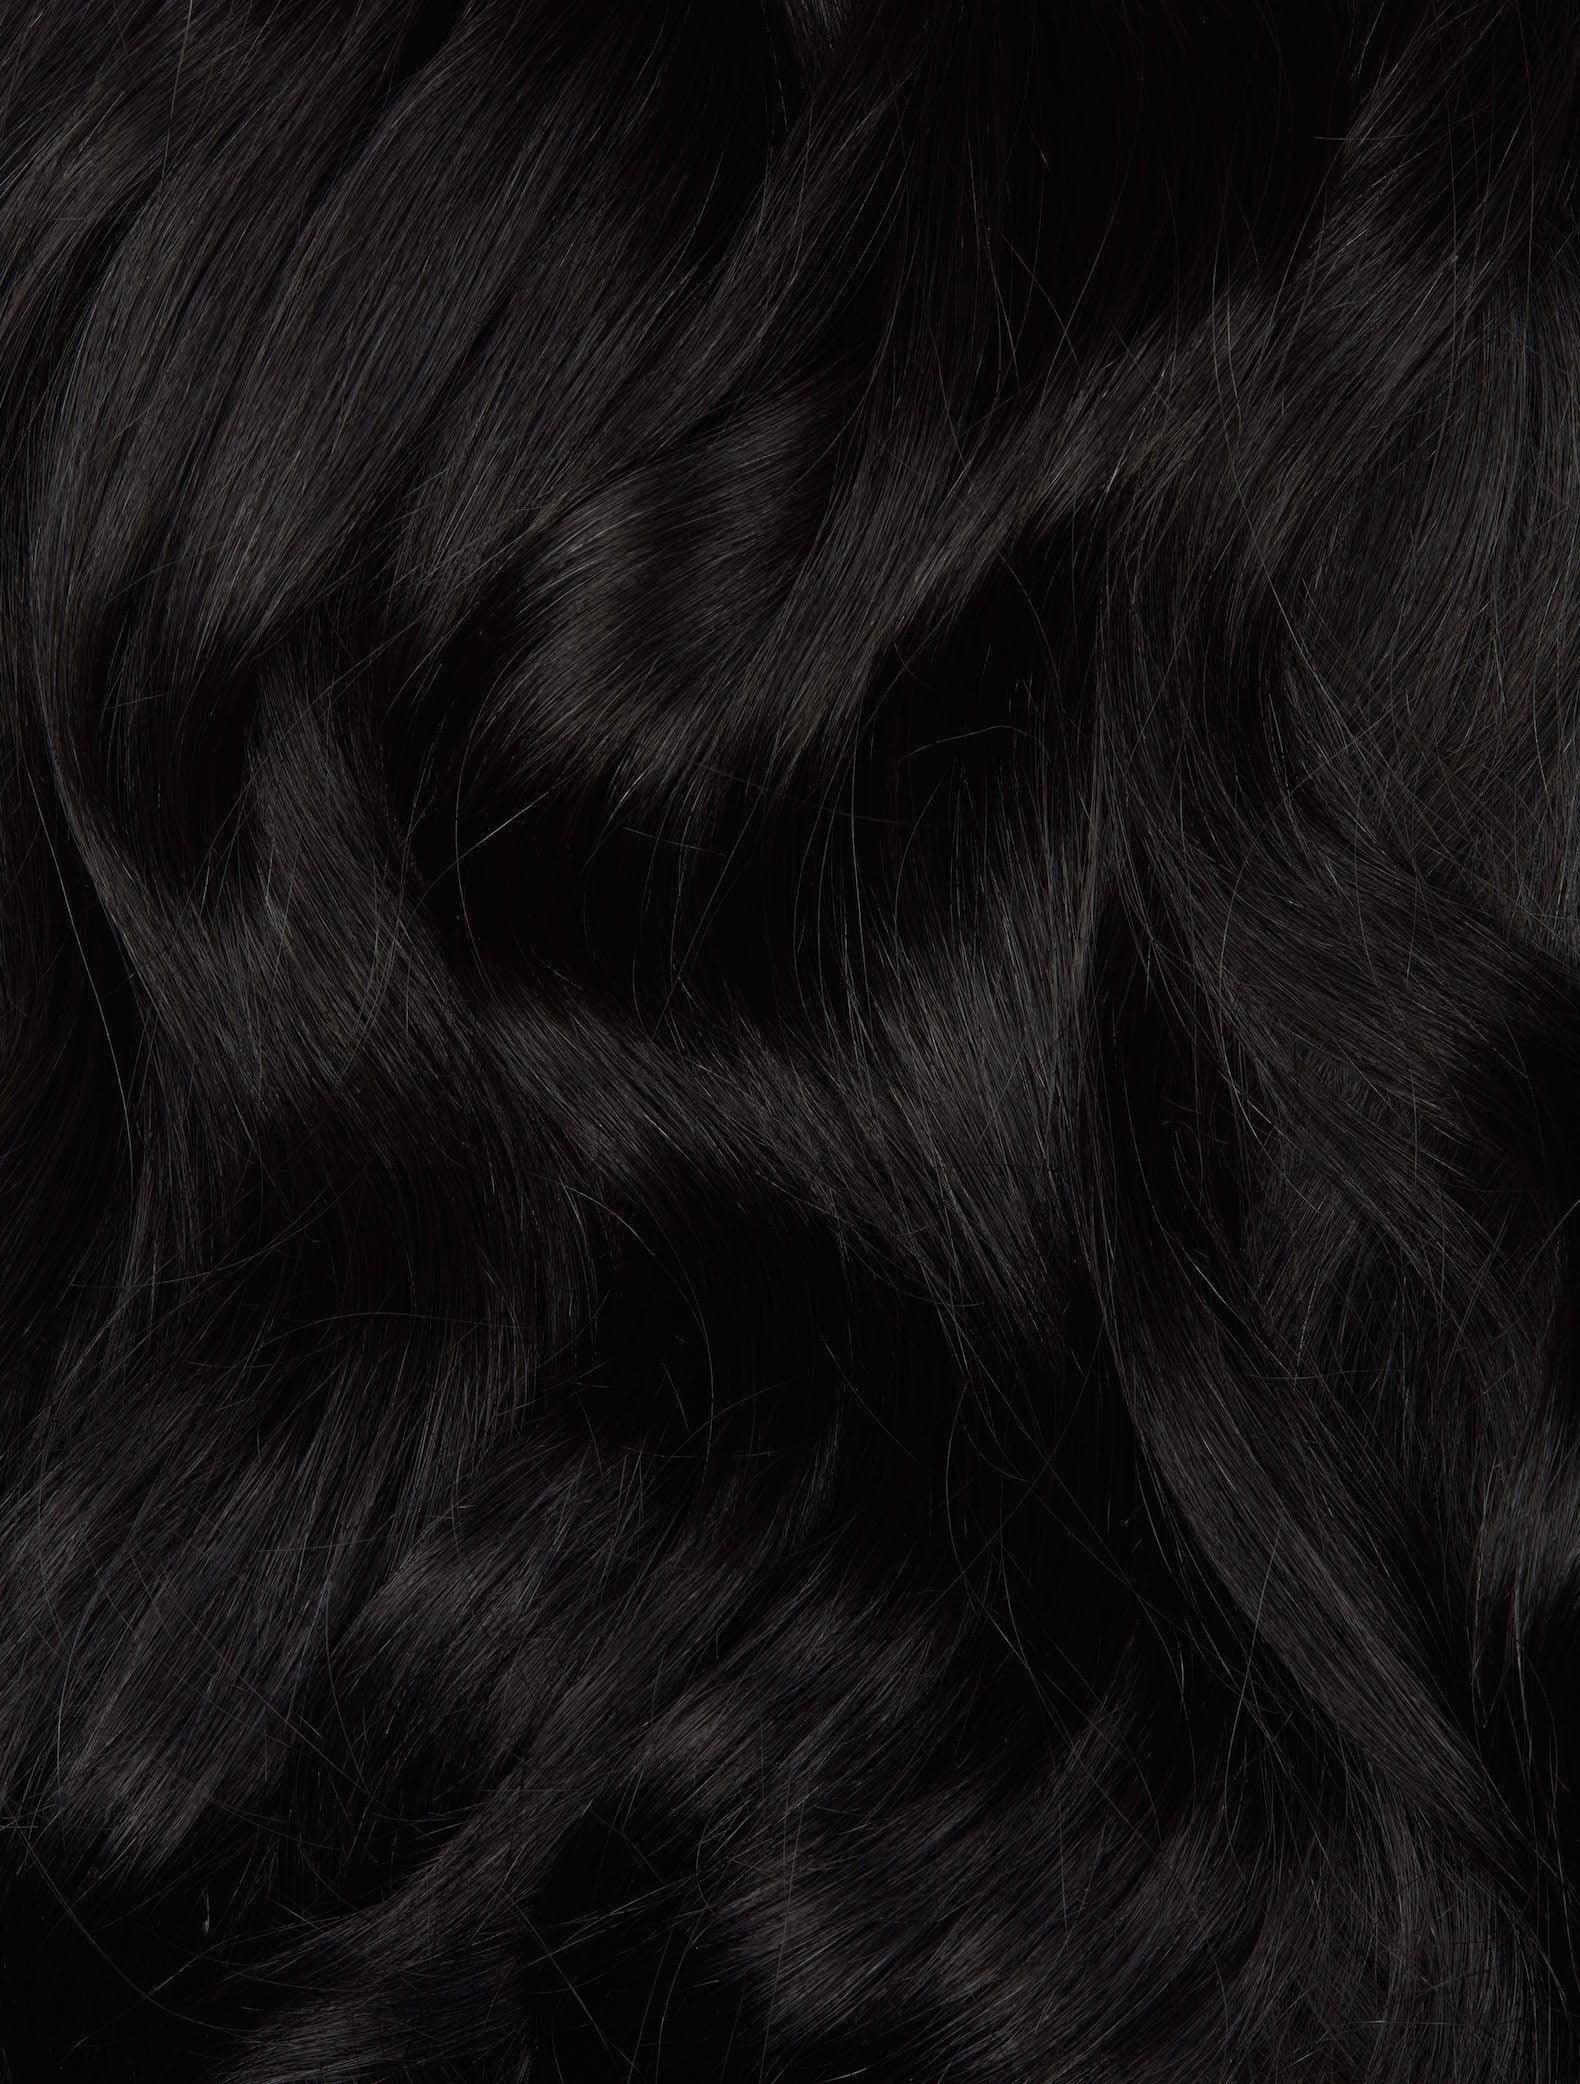 Jet Black (1) 22 220g - Black Hair Extensions – BOMBAY HAIR